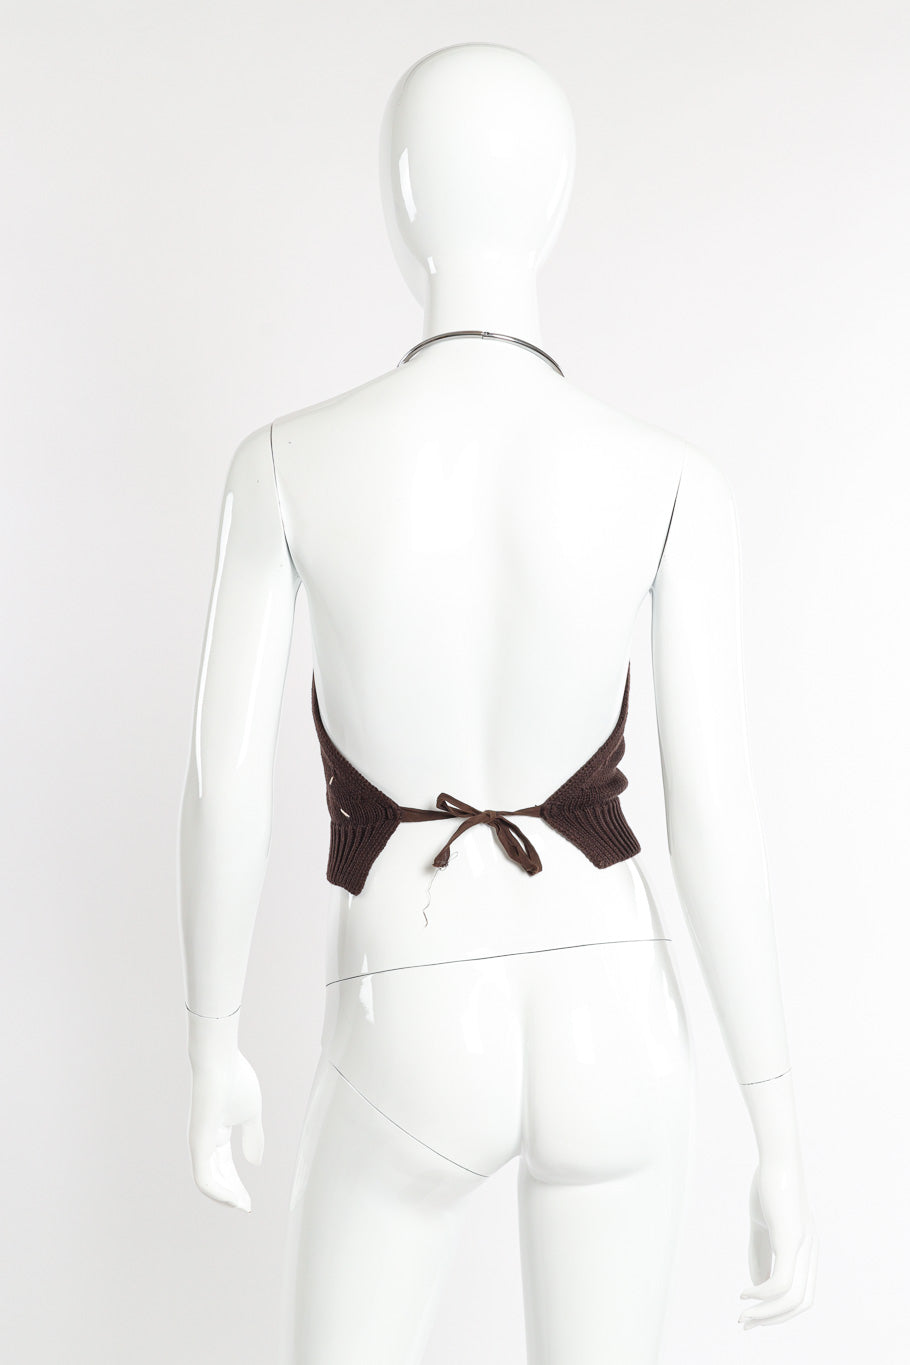 Knit halter top by Maison Margiela on mannequin back @recessla